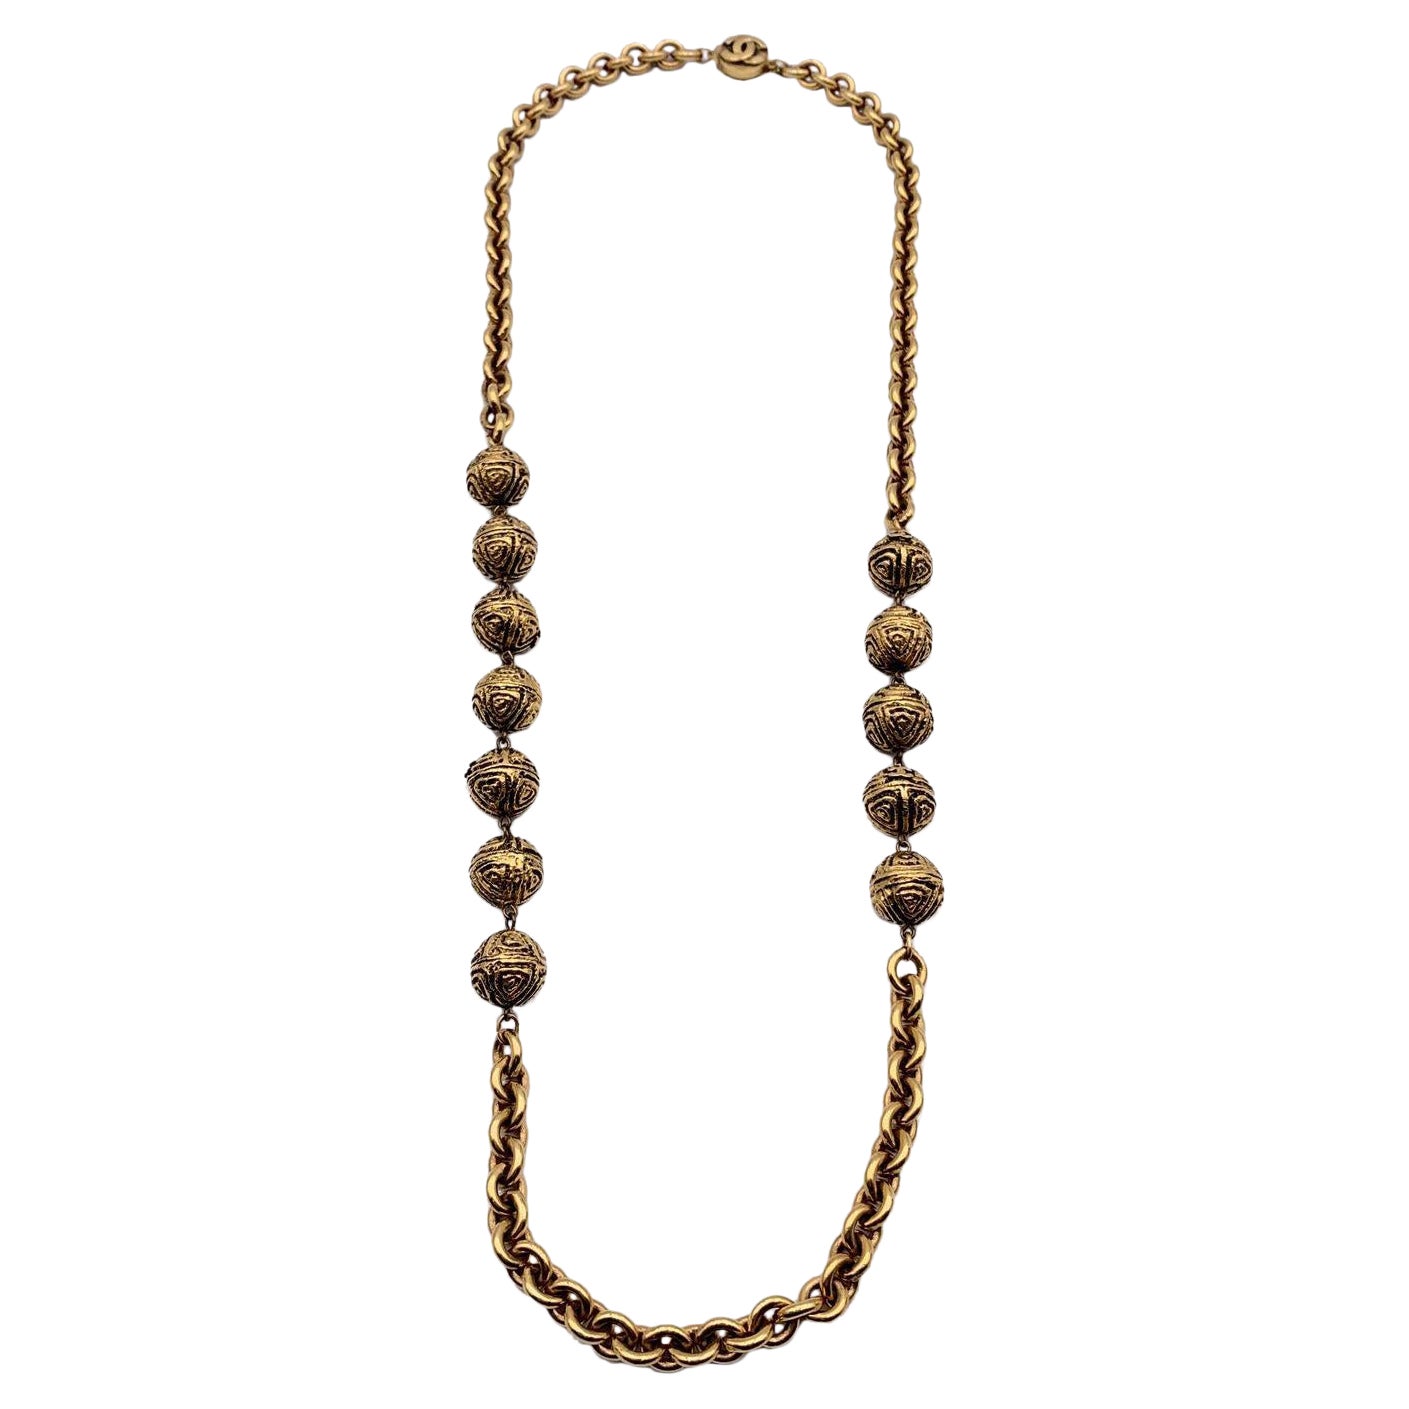 Chanel Vintage 1980er Jahre Gold Metallkette Halskette mit Metallperlen mit Metallperlen